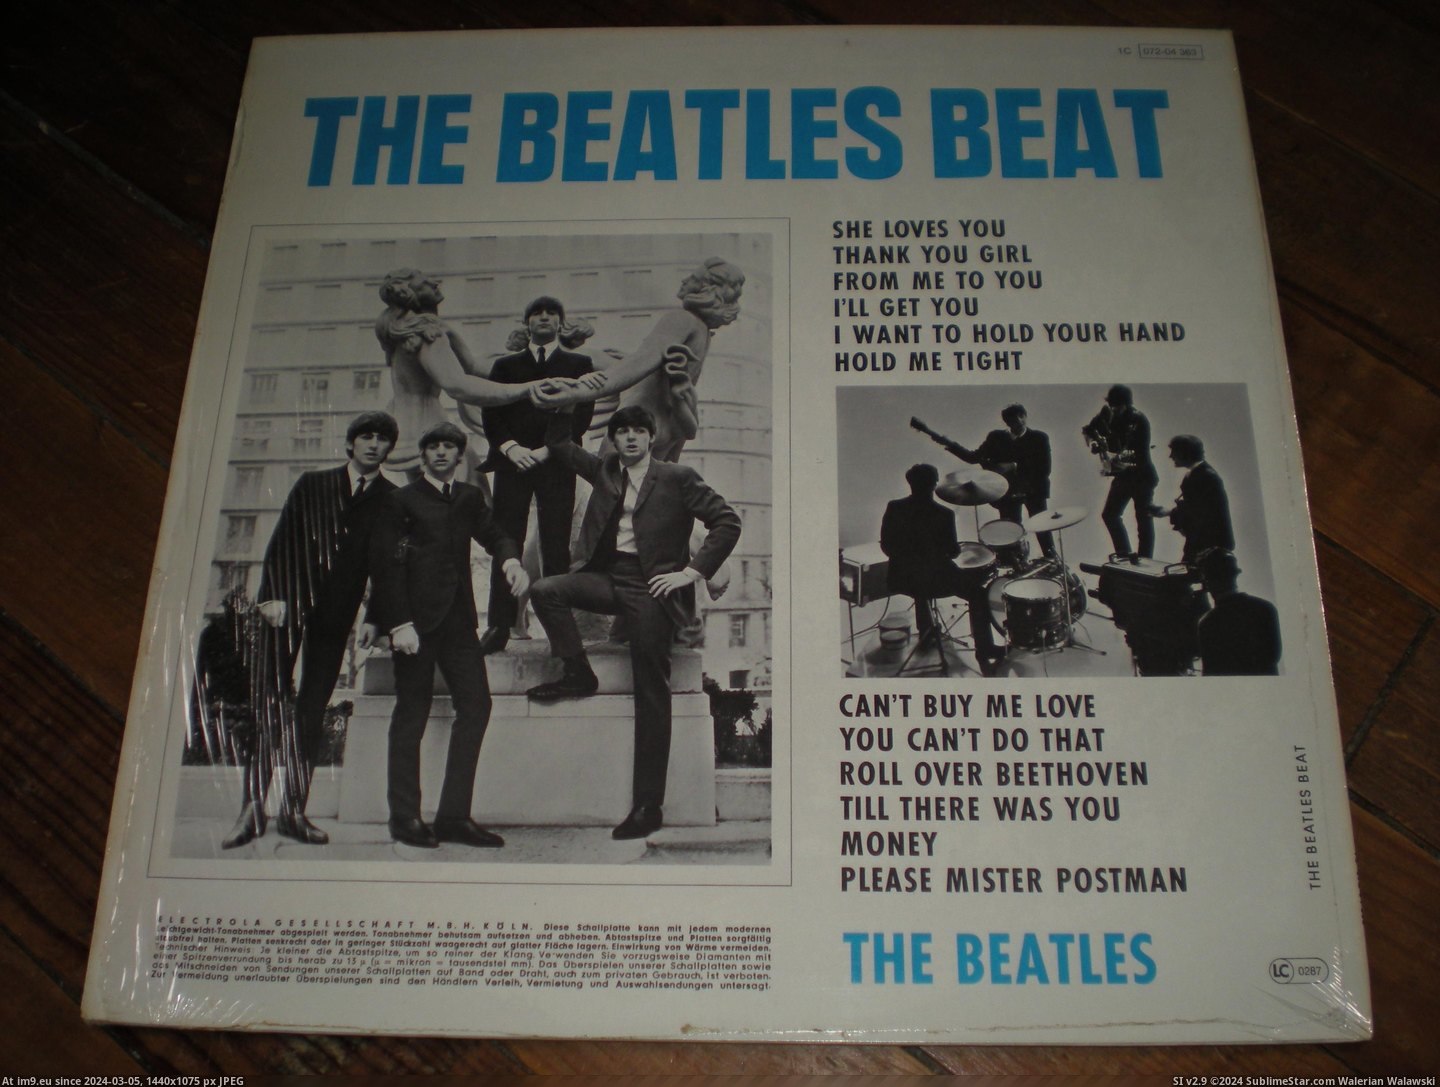 #Beatles #Beat #Odeon Beatles Beat ODEON 7 Pic. (Изображение из альбом new 1))